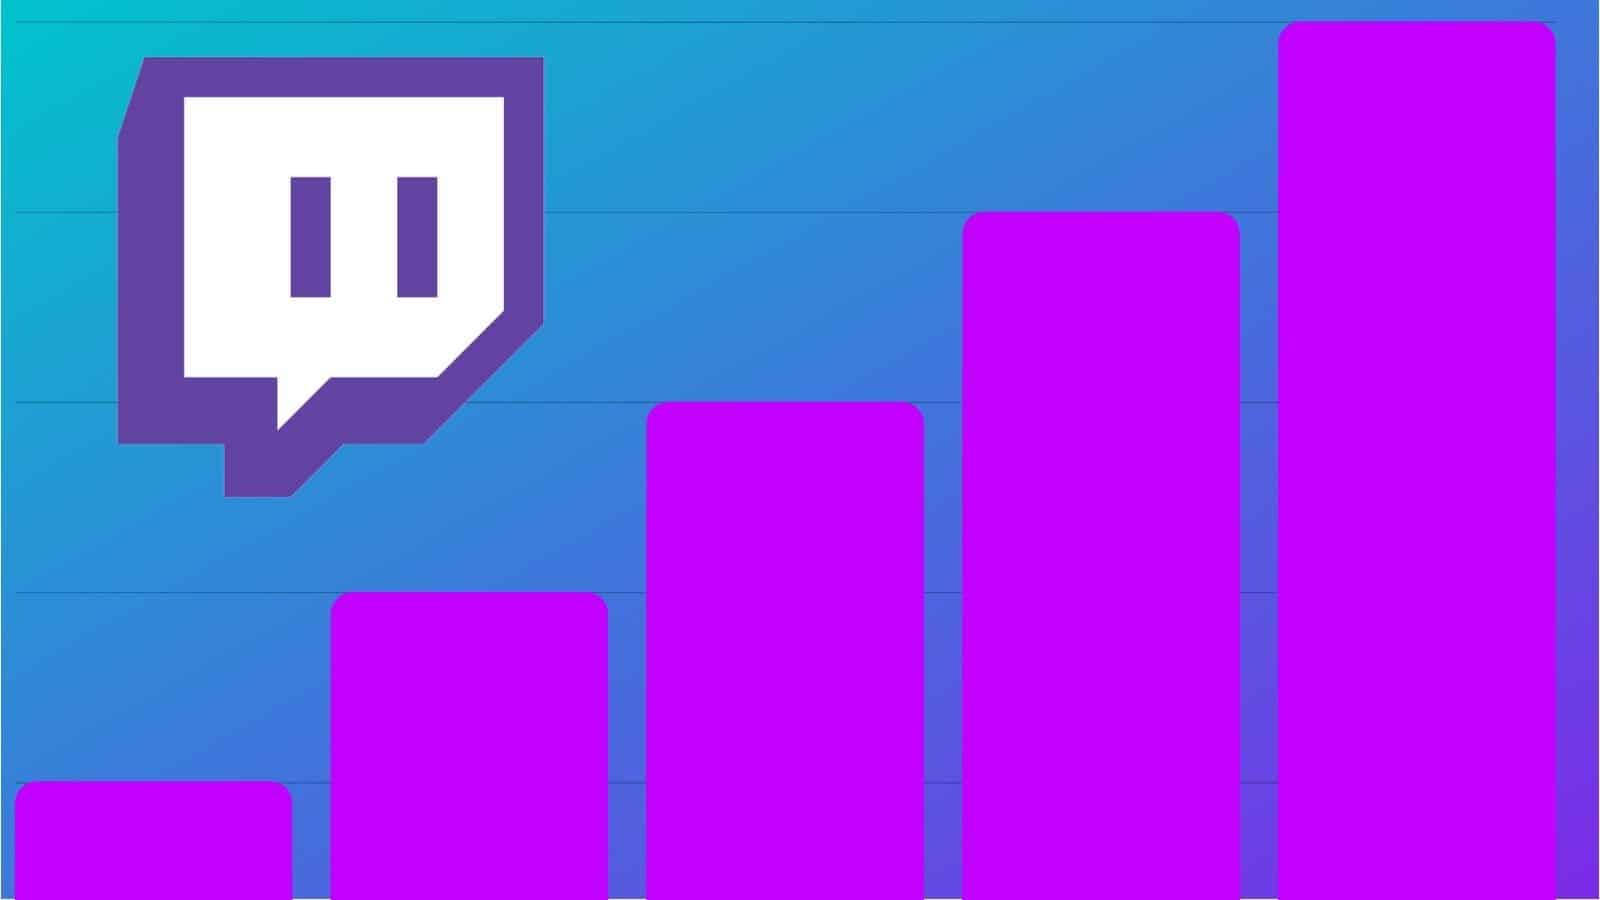 Twitch viewership growth